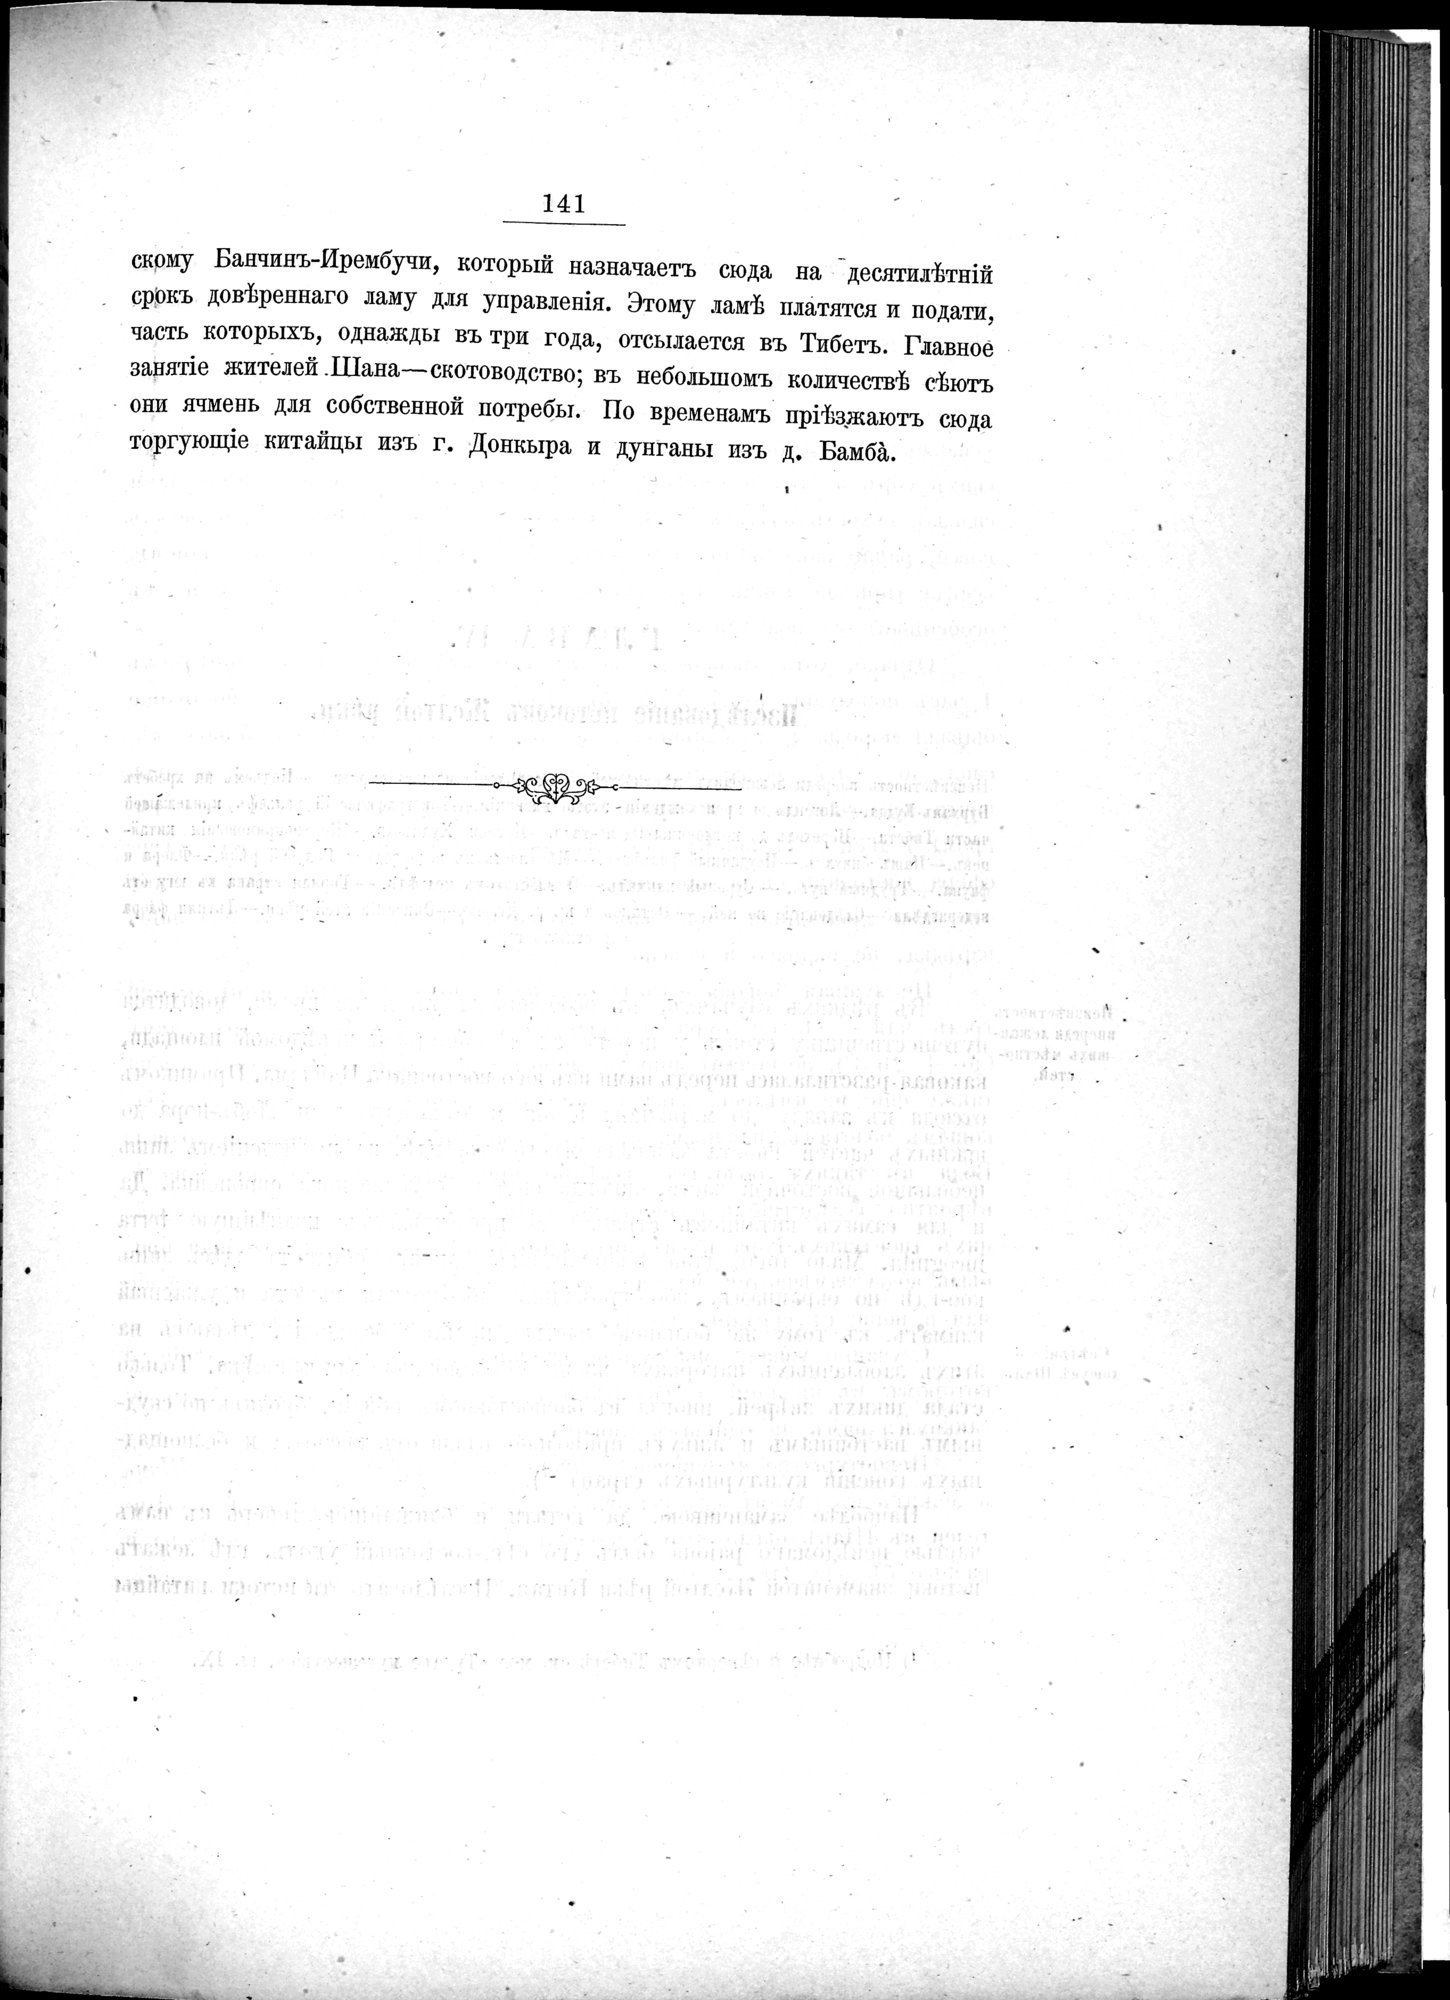 Ot Kiakhty na Istoki Zheltoi Rieki : vol.1 / Page 163 (Grayscale High Resolution Image)